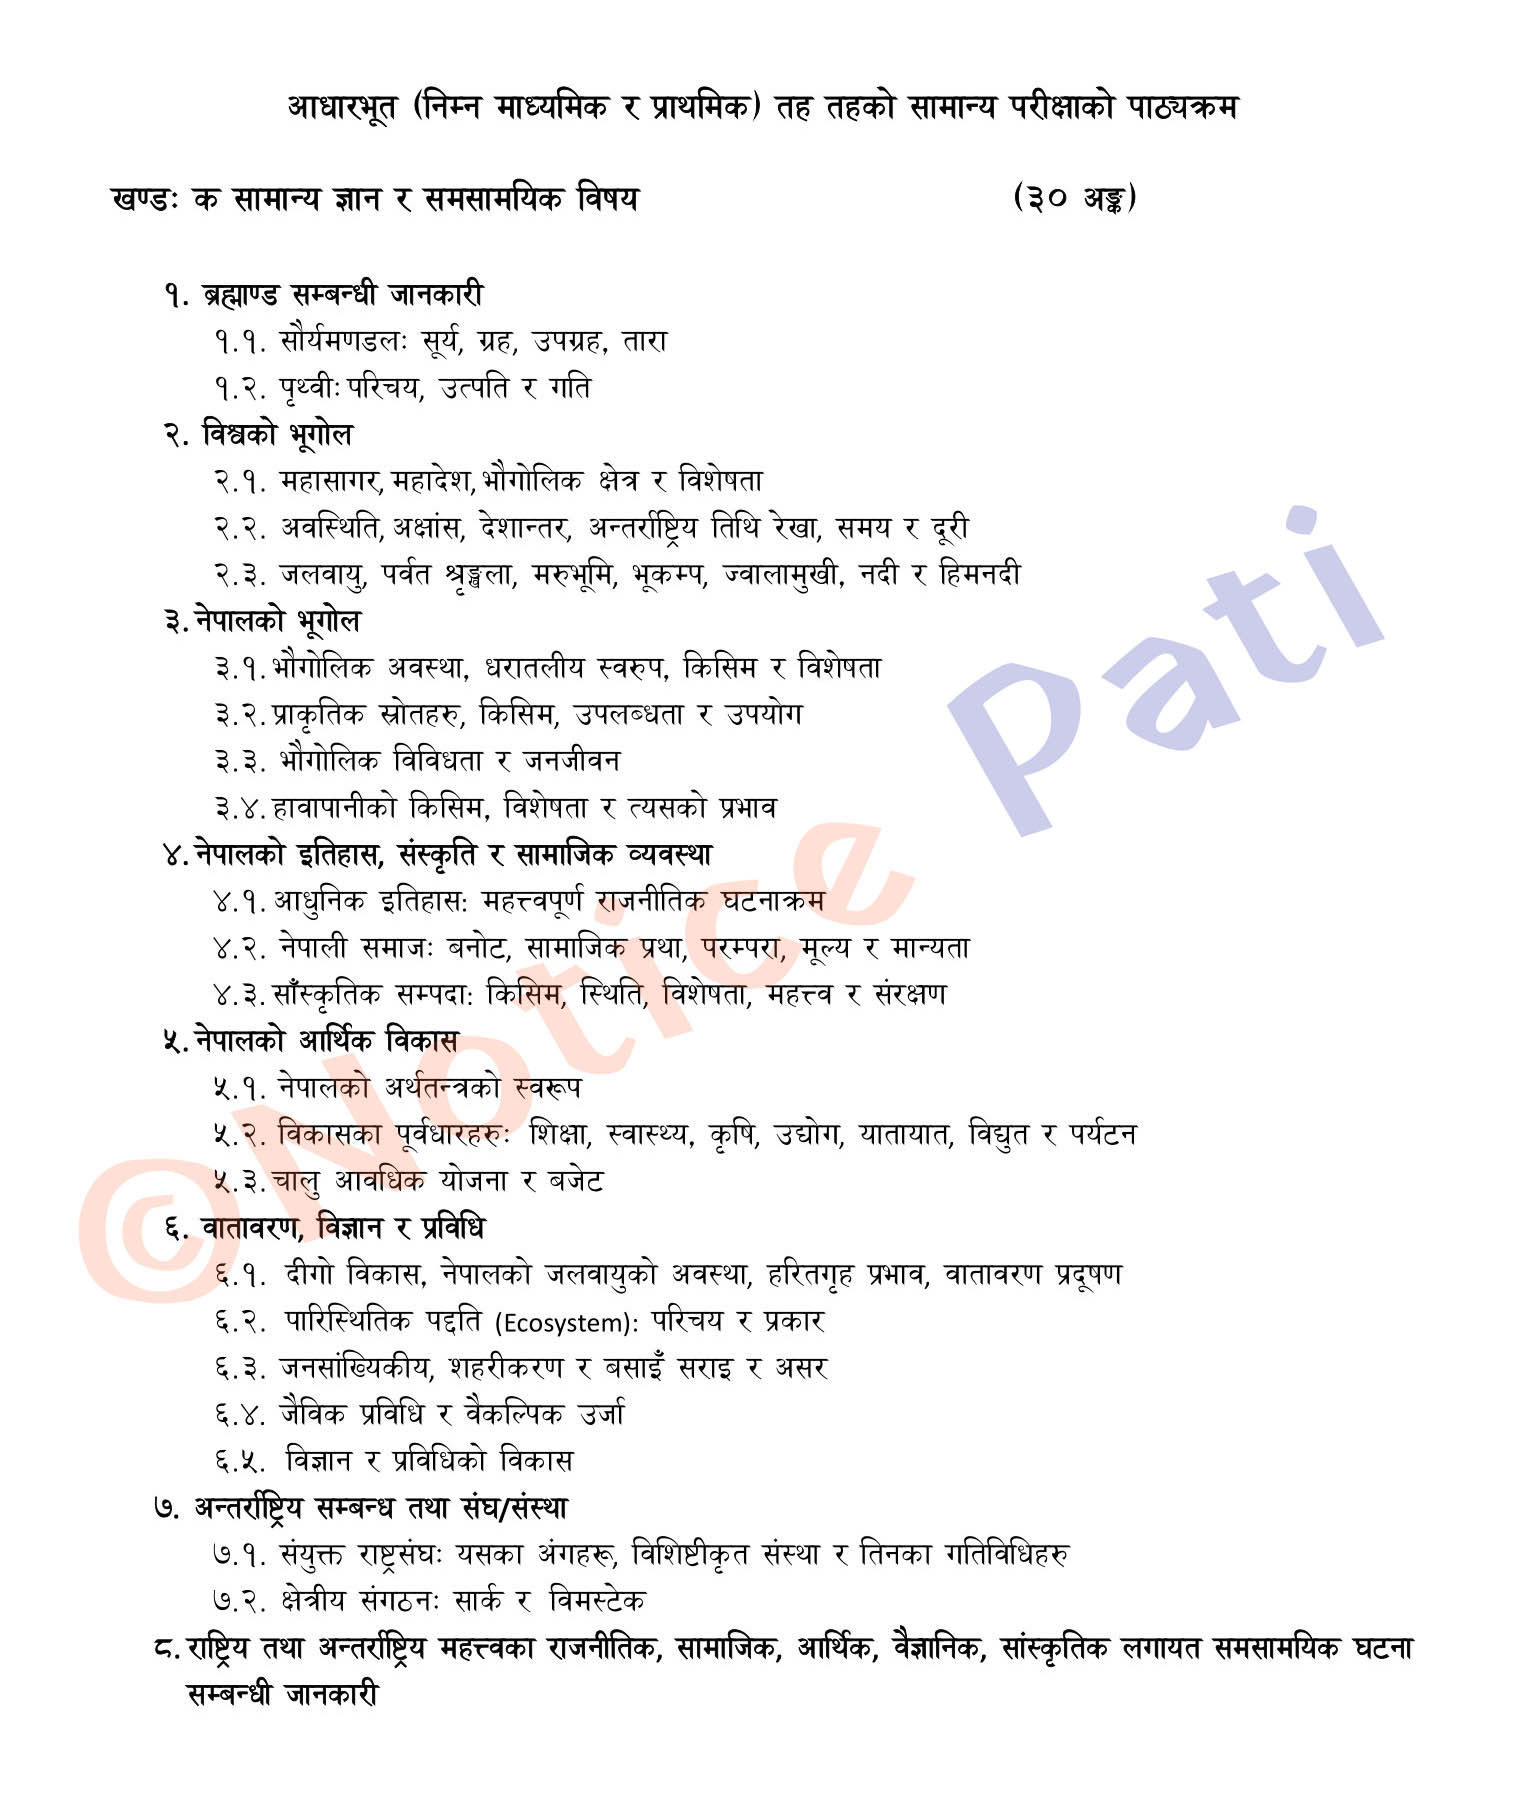 Teacher Service Commission (TSC) Primary level objective Questioon Exam syllabus. This Primary level Curriculum (प्राथमिक तहको पाठ्यक्रम) is published by Shikshak Sewa Aayog, Nepa.